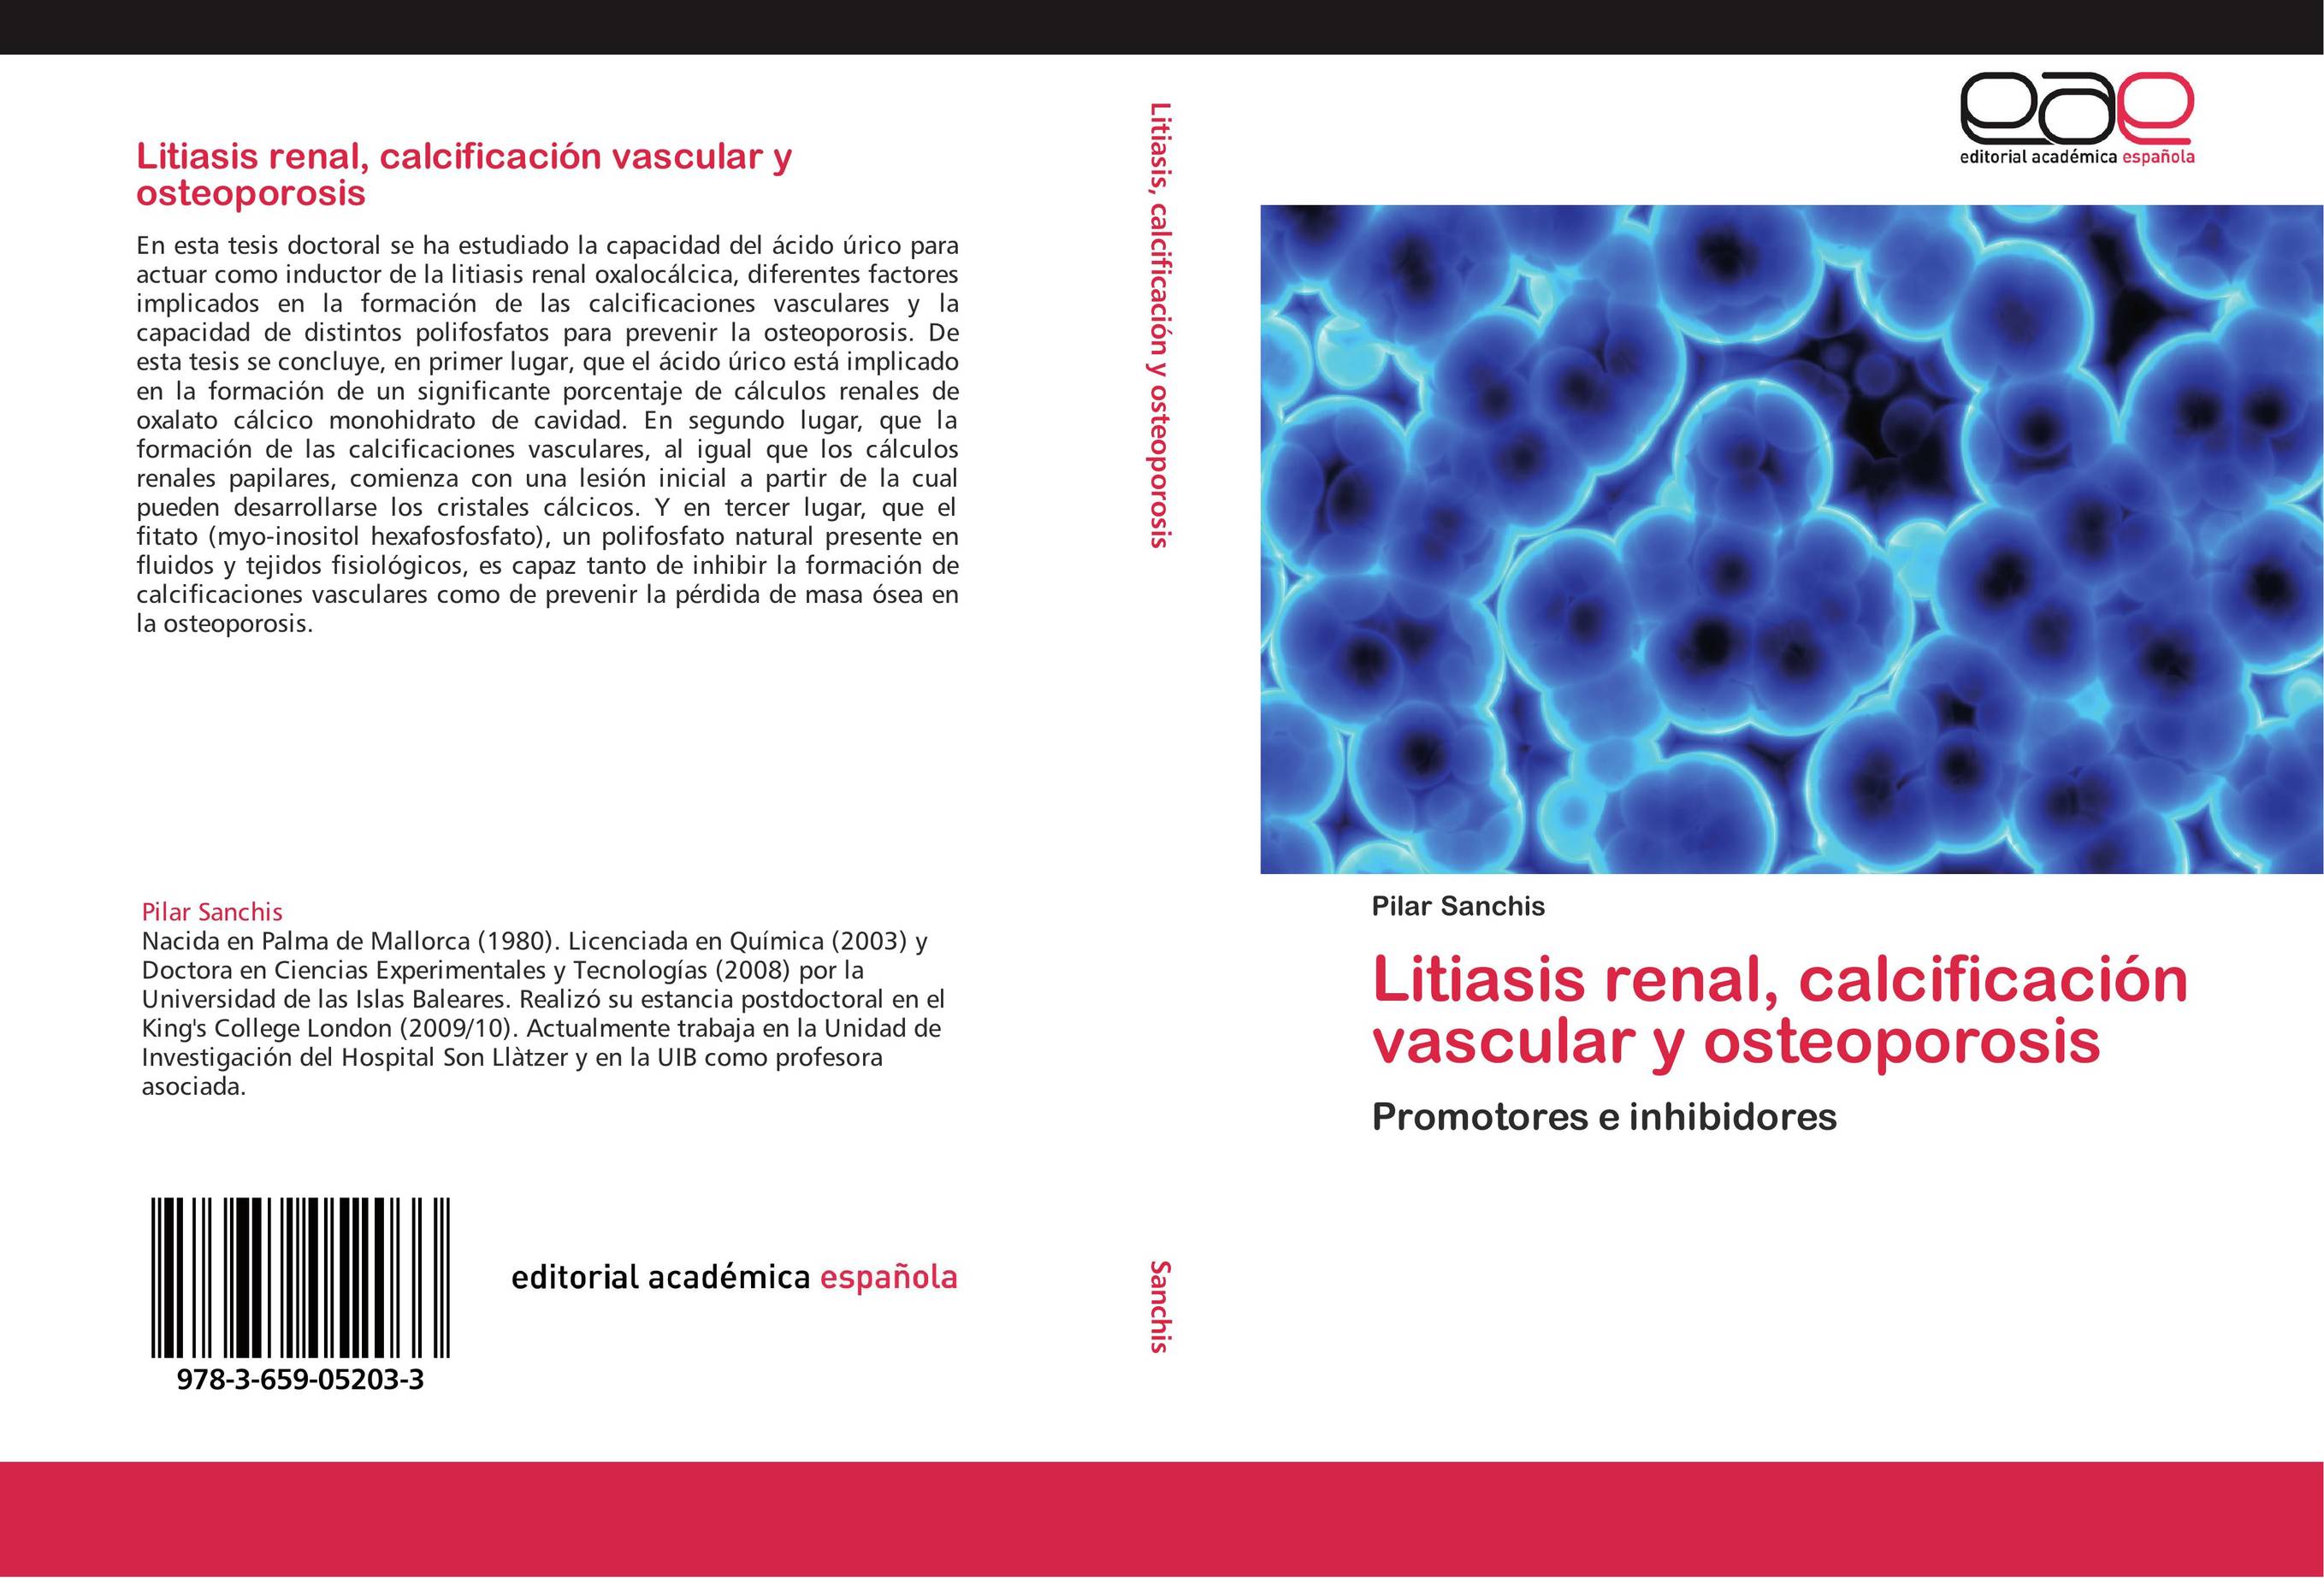 Litiasis renal, calcificación vascular y osteoporosis